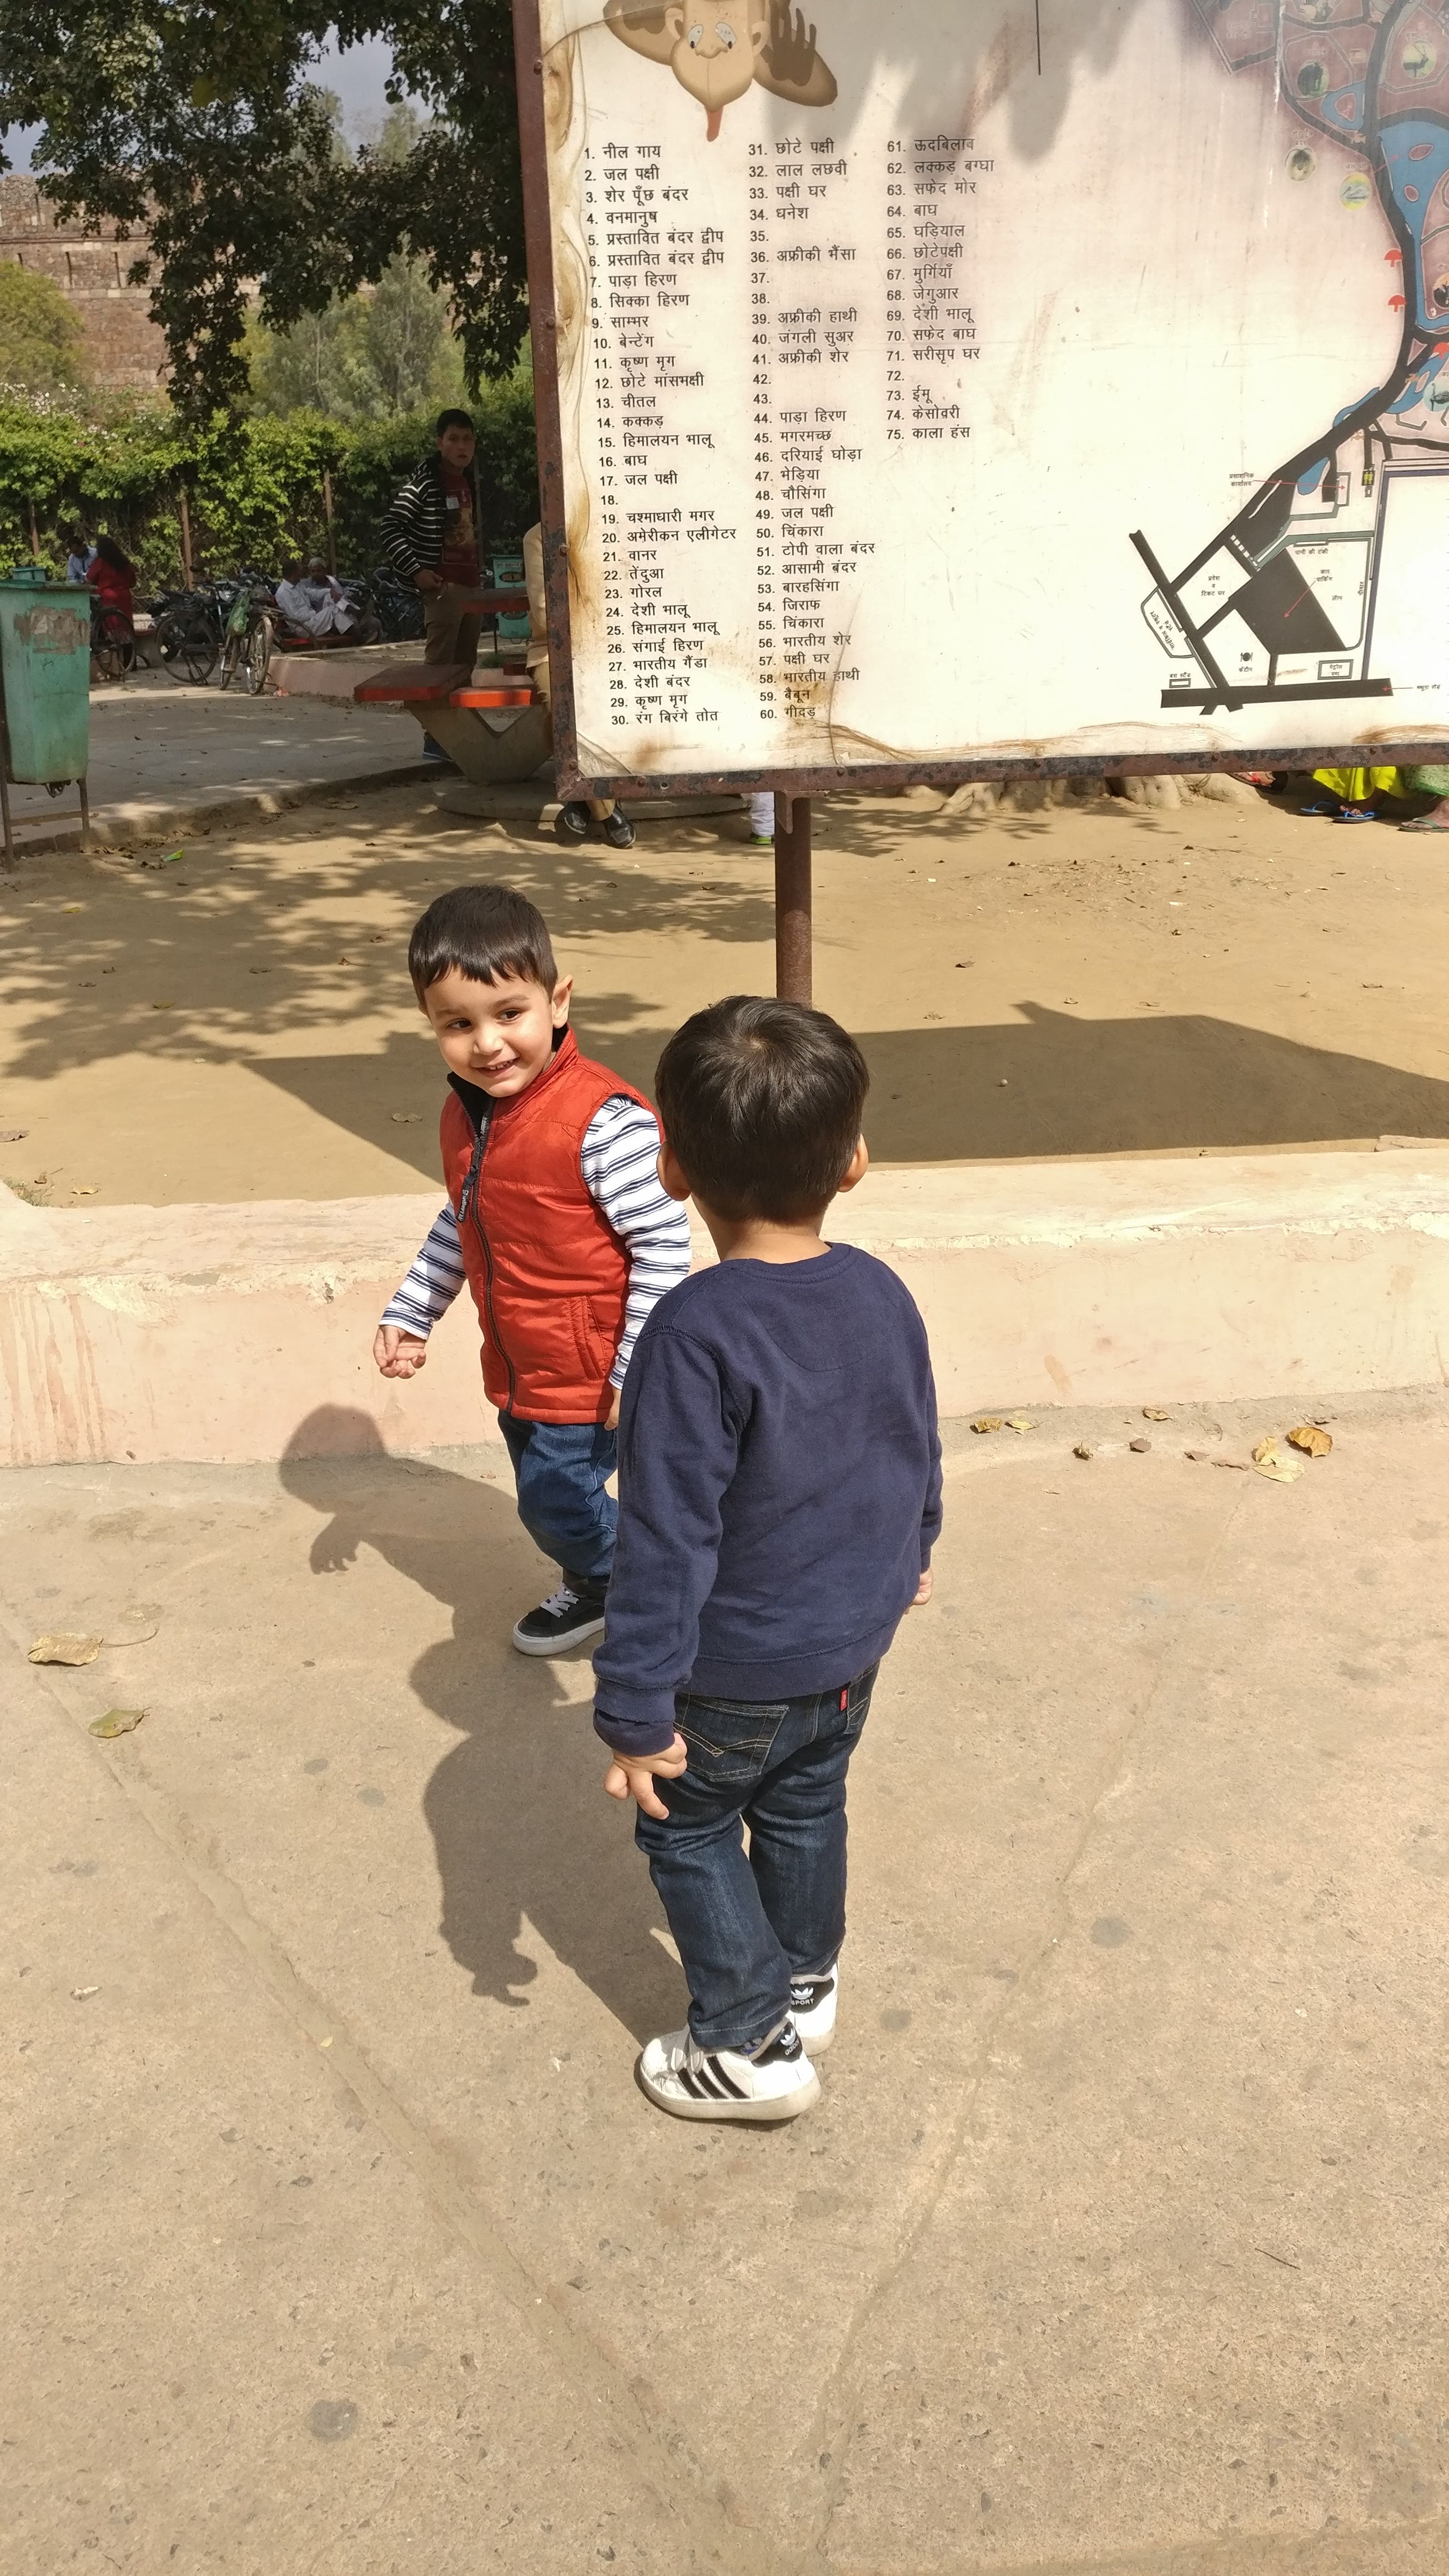 Children enjoying the zoo